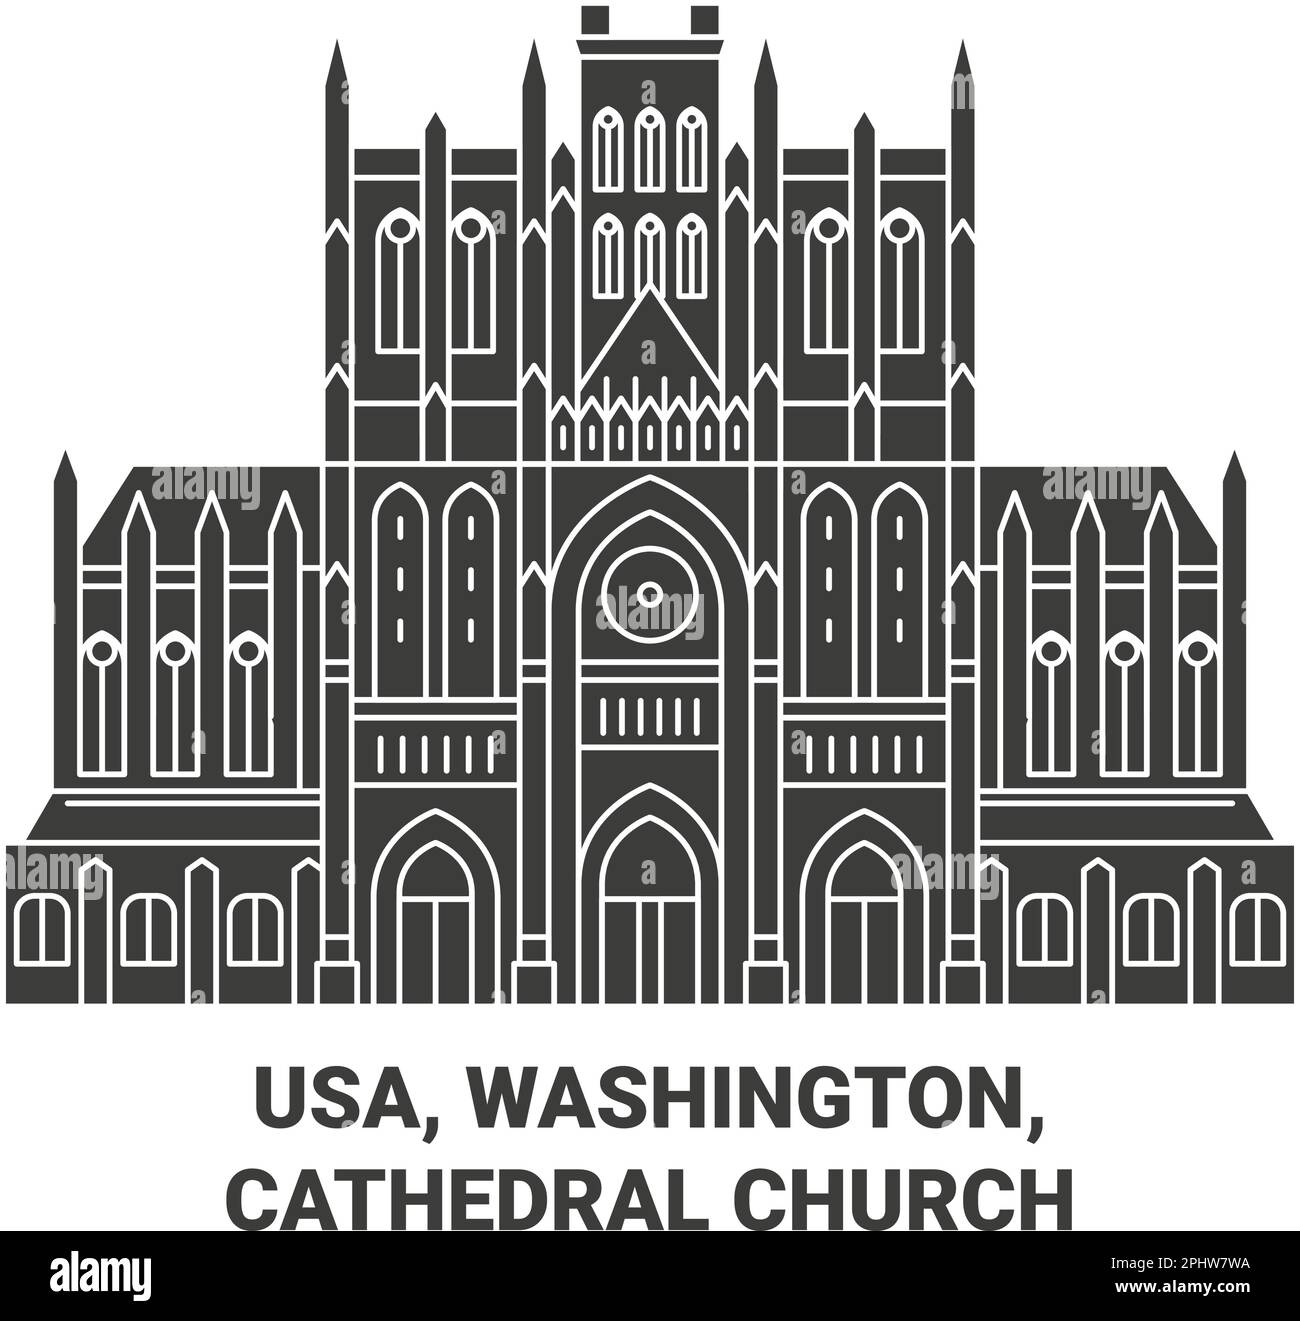 USA, Washington, Cathedral Church, Reiseziel-Vektorgrafik Stock Vektor